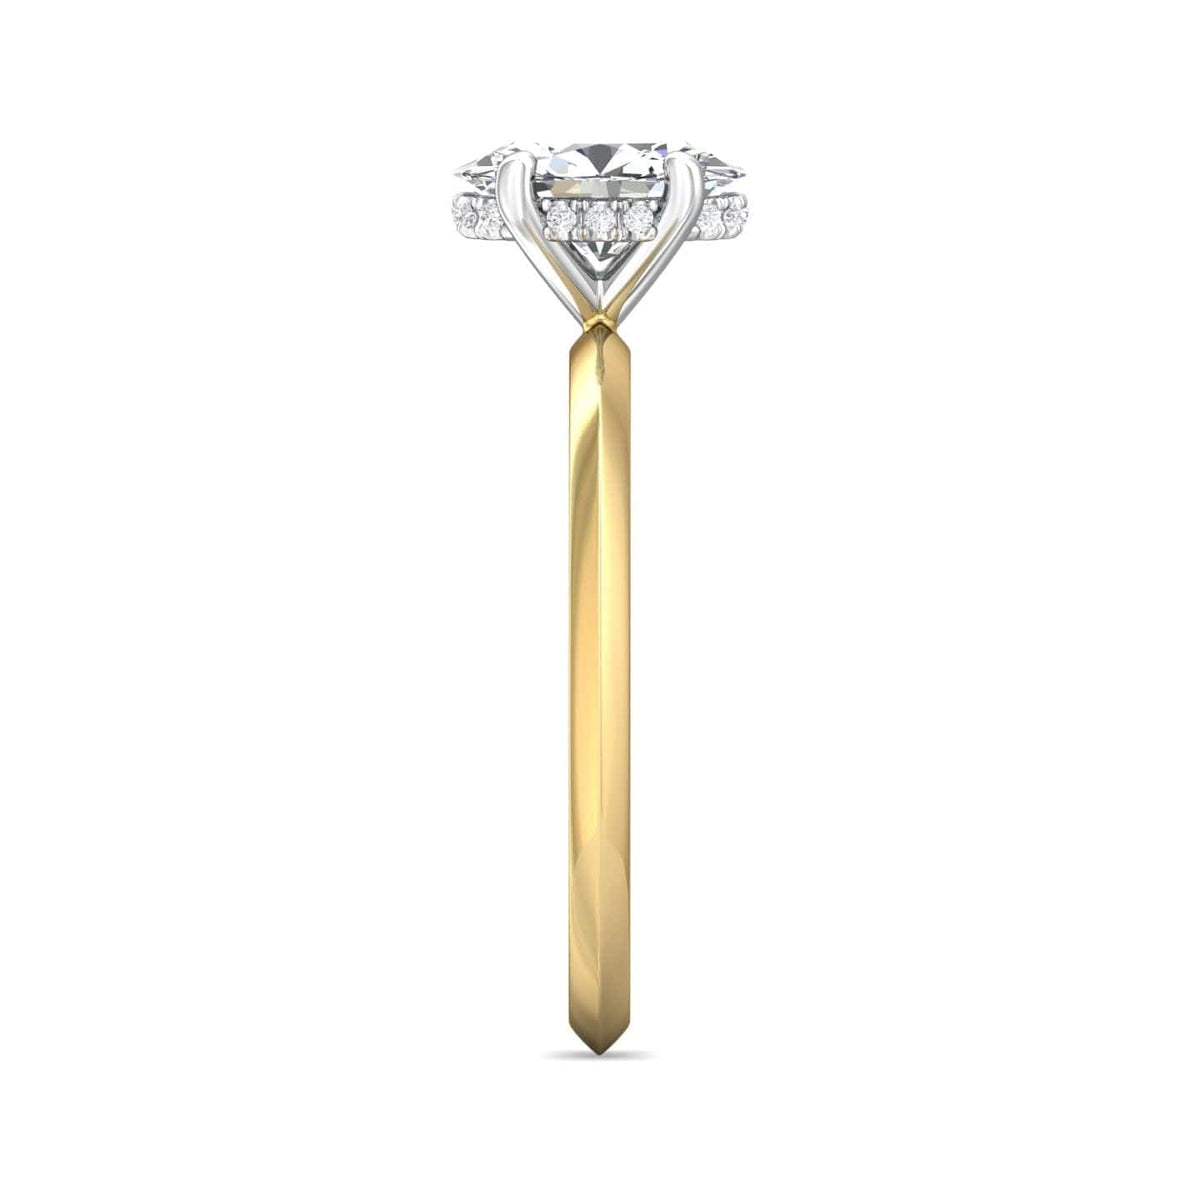 18K Yellow Gold Knife Edge & Platinum Head Diamond Engagement Ring Setting